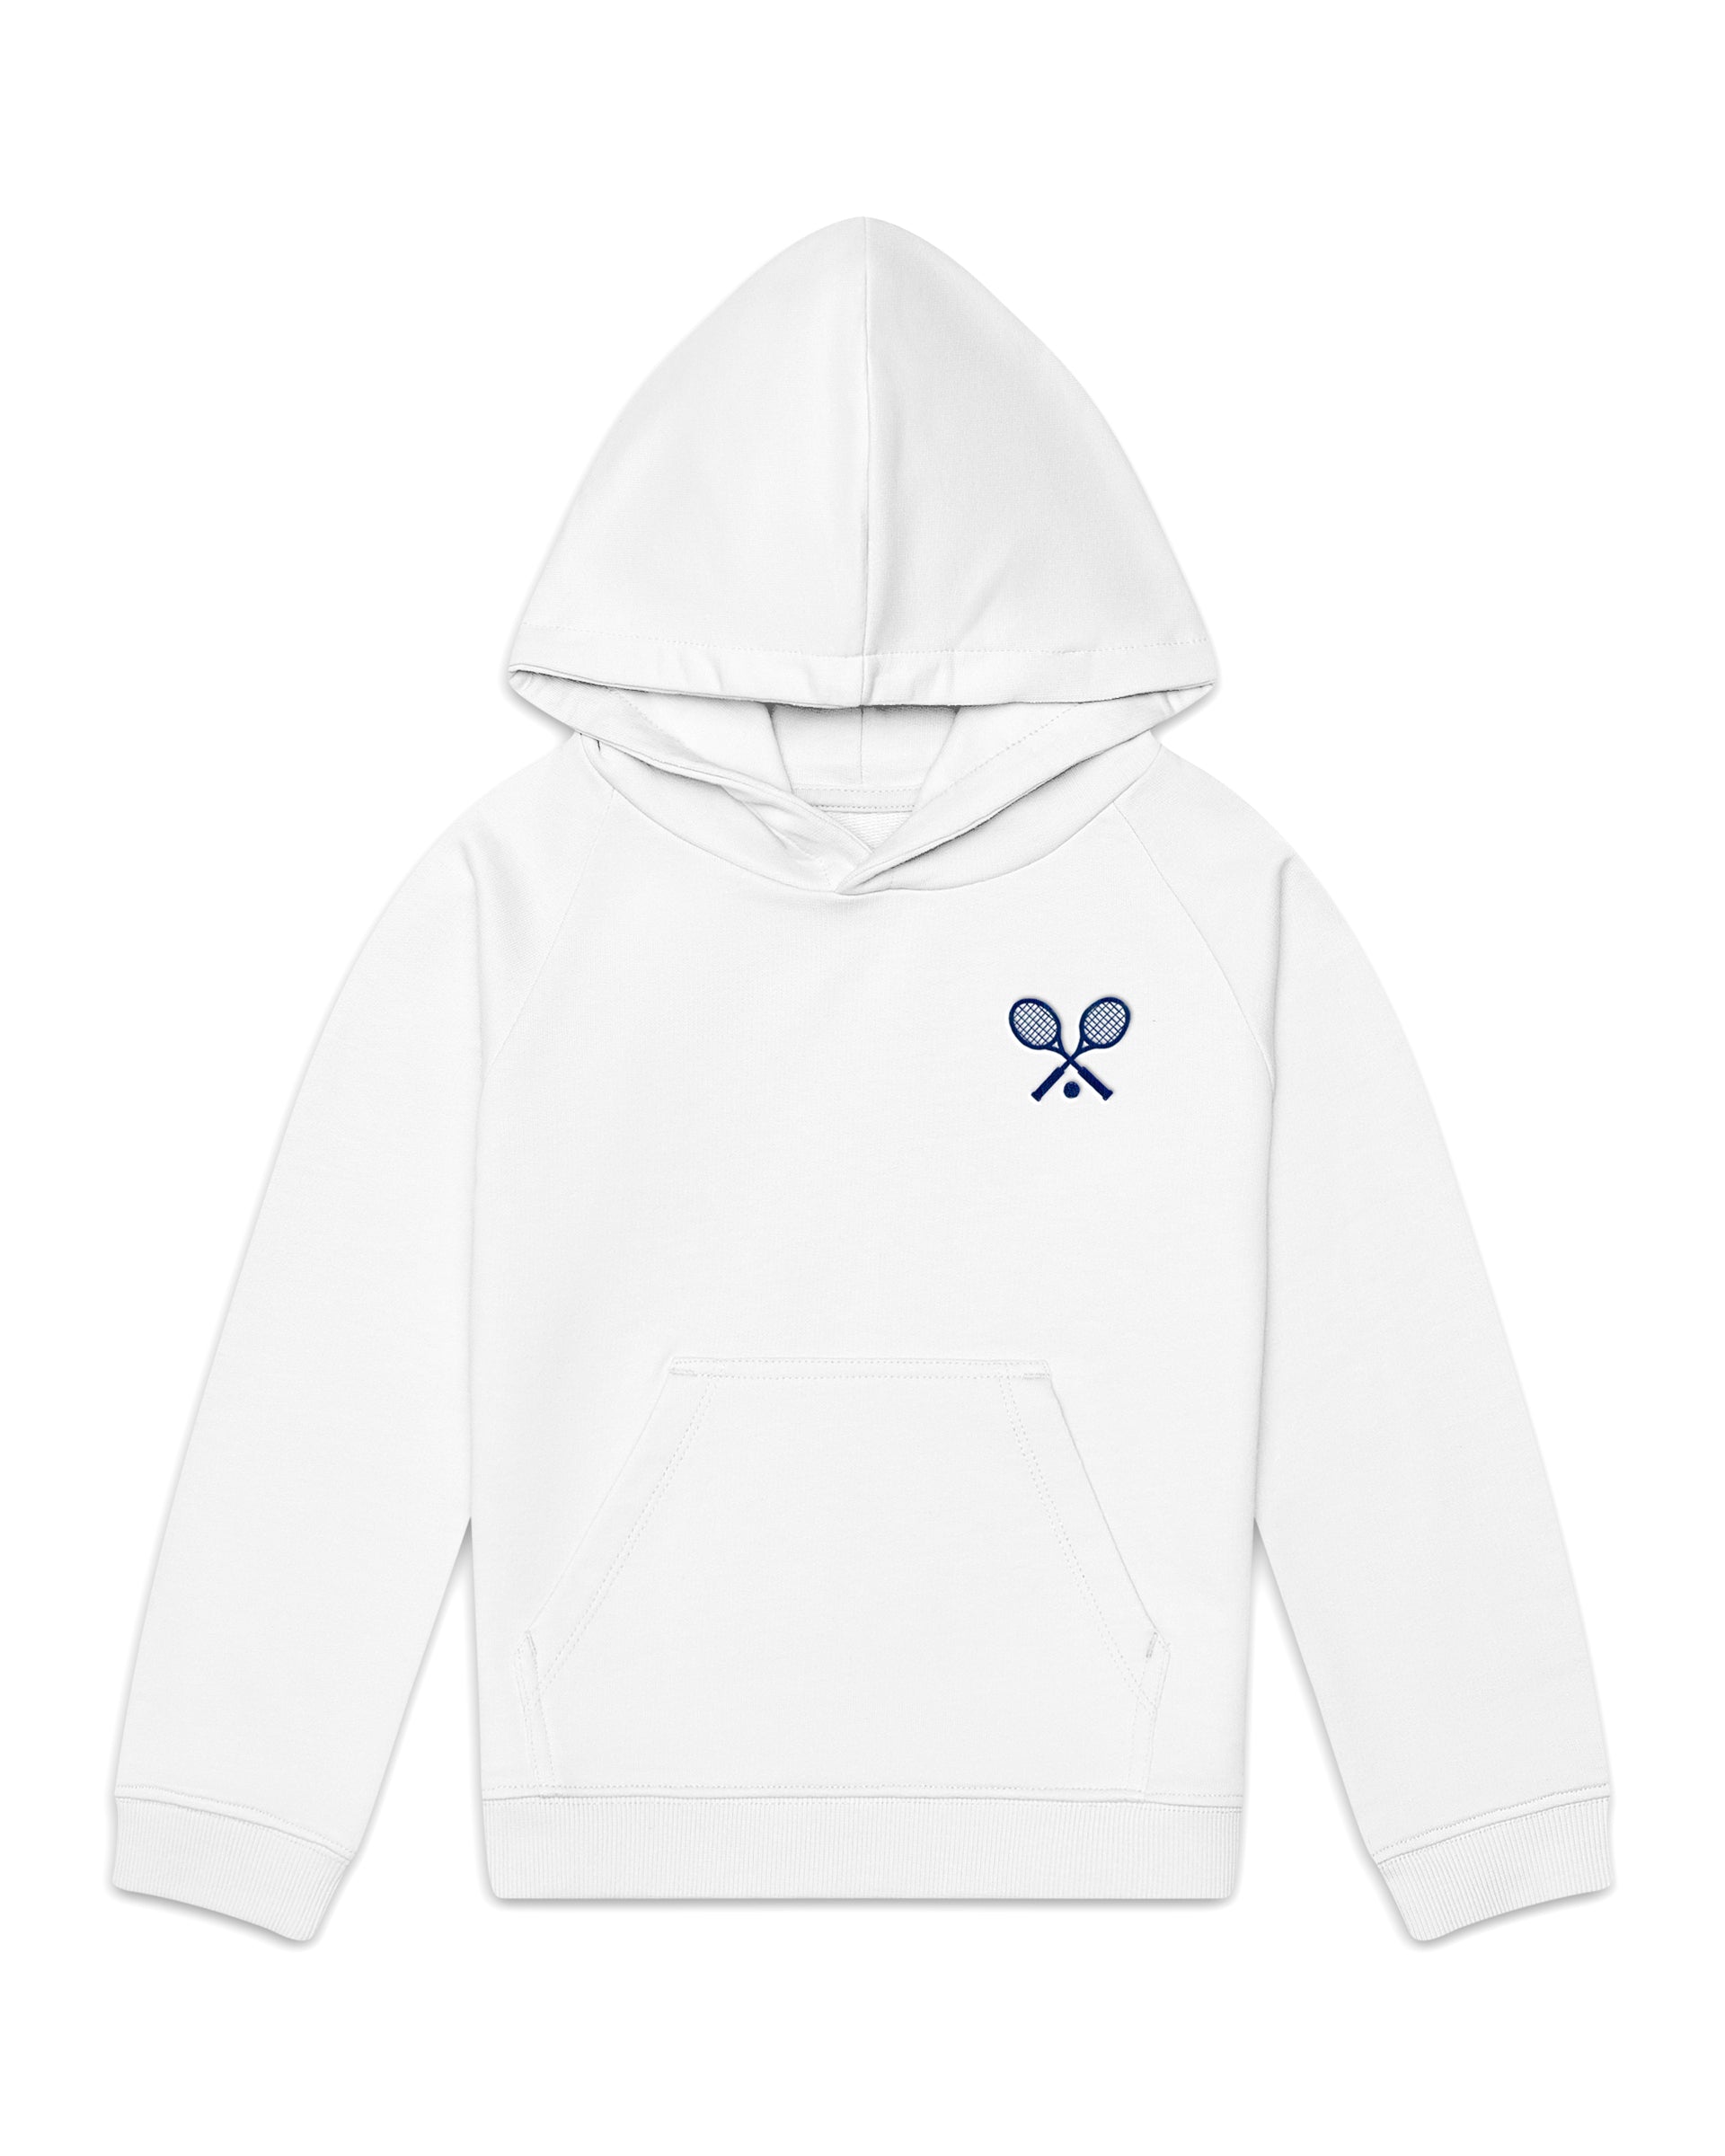 The Organic Embroidered Hoodie Sweatshirt [White Tennis]